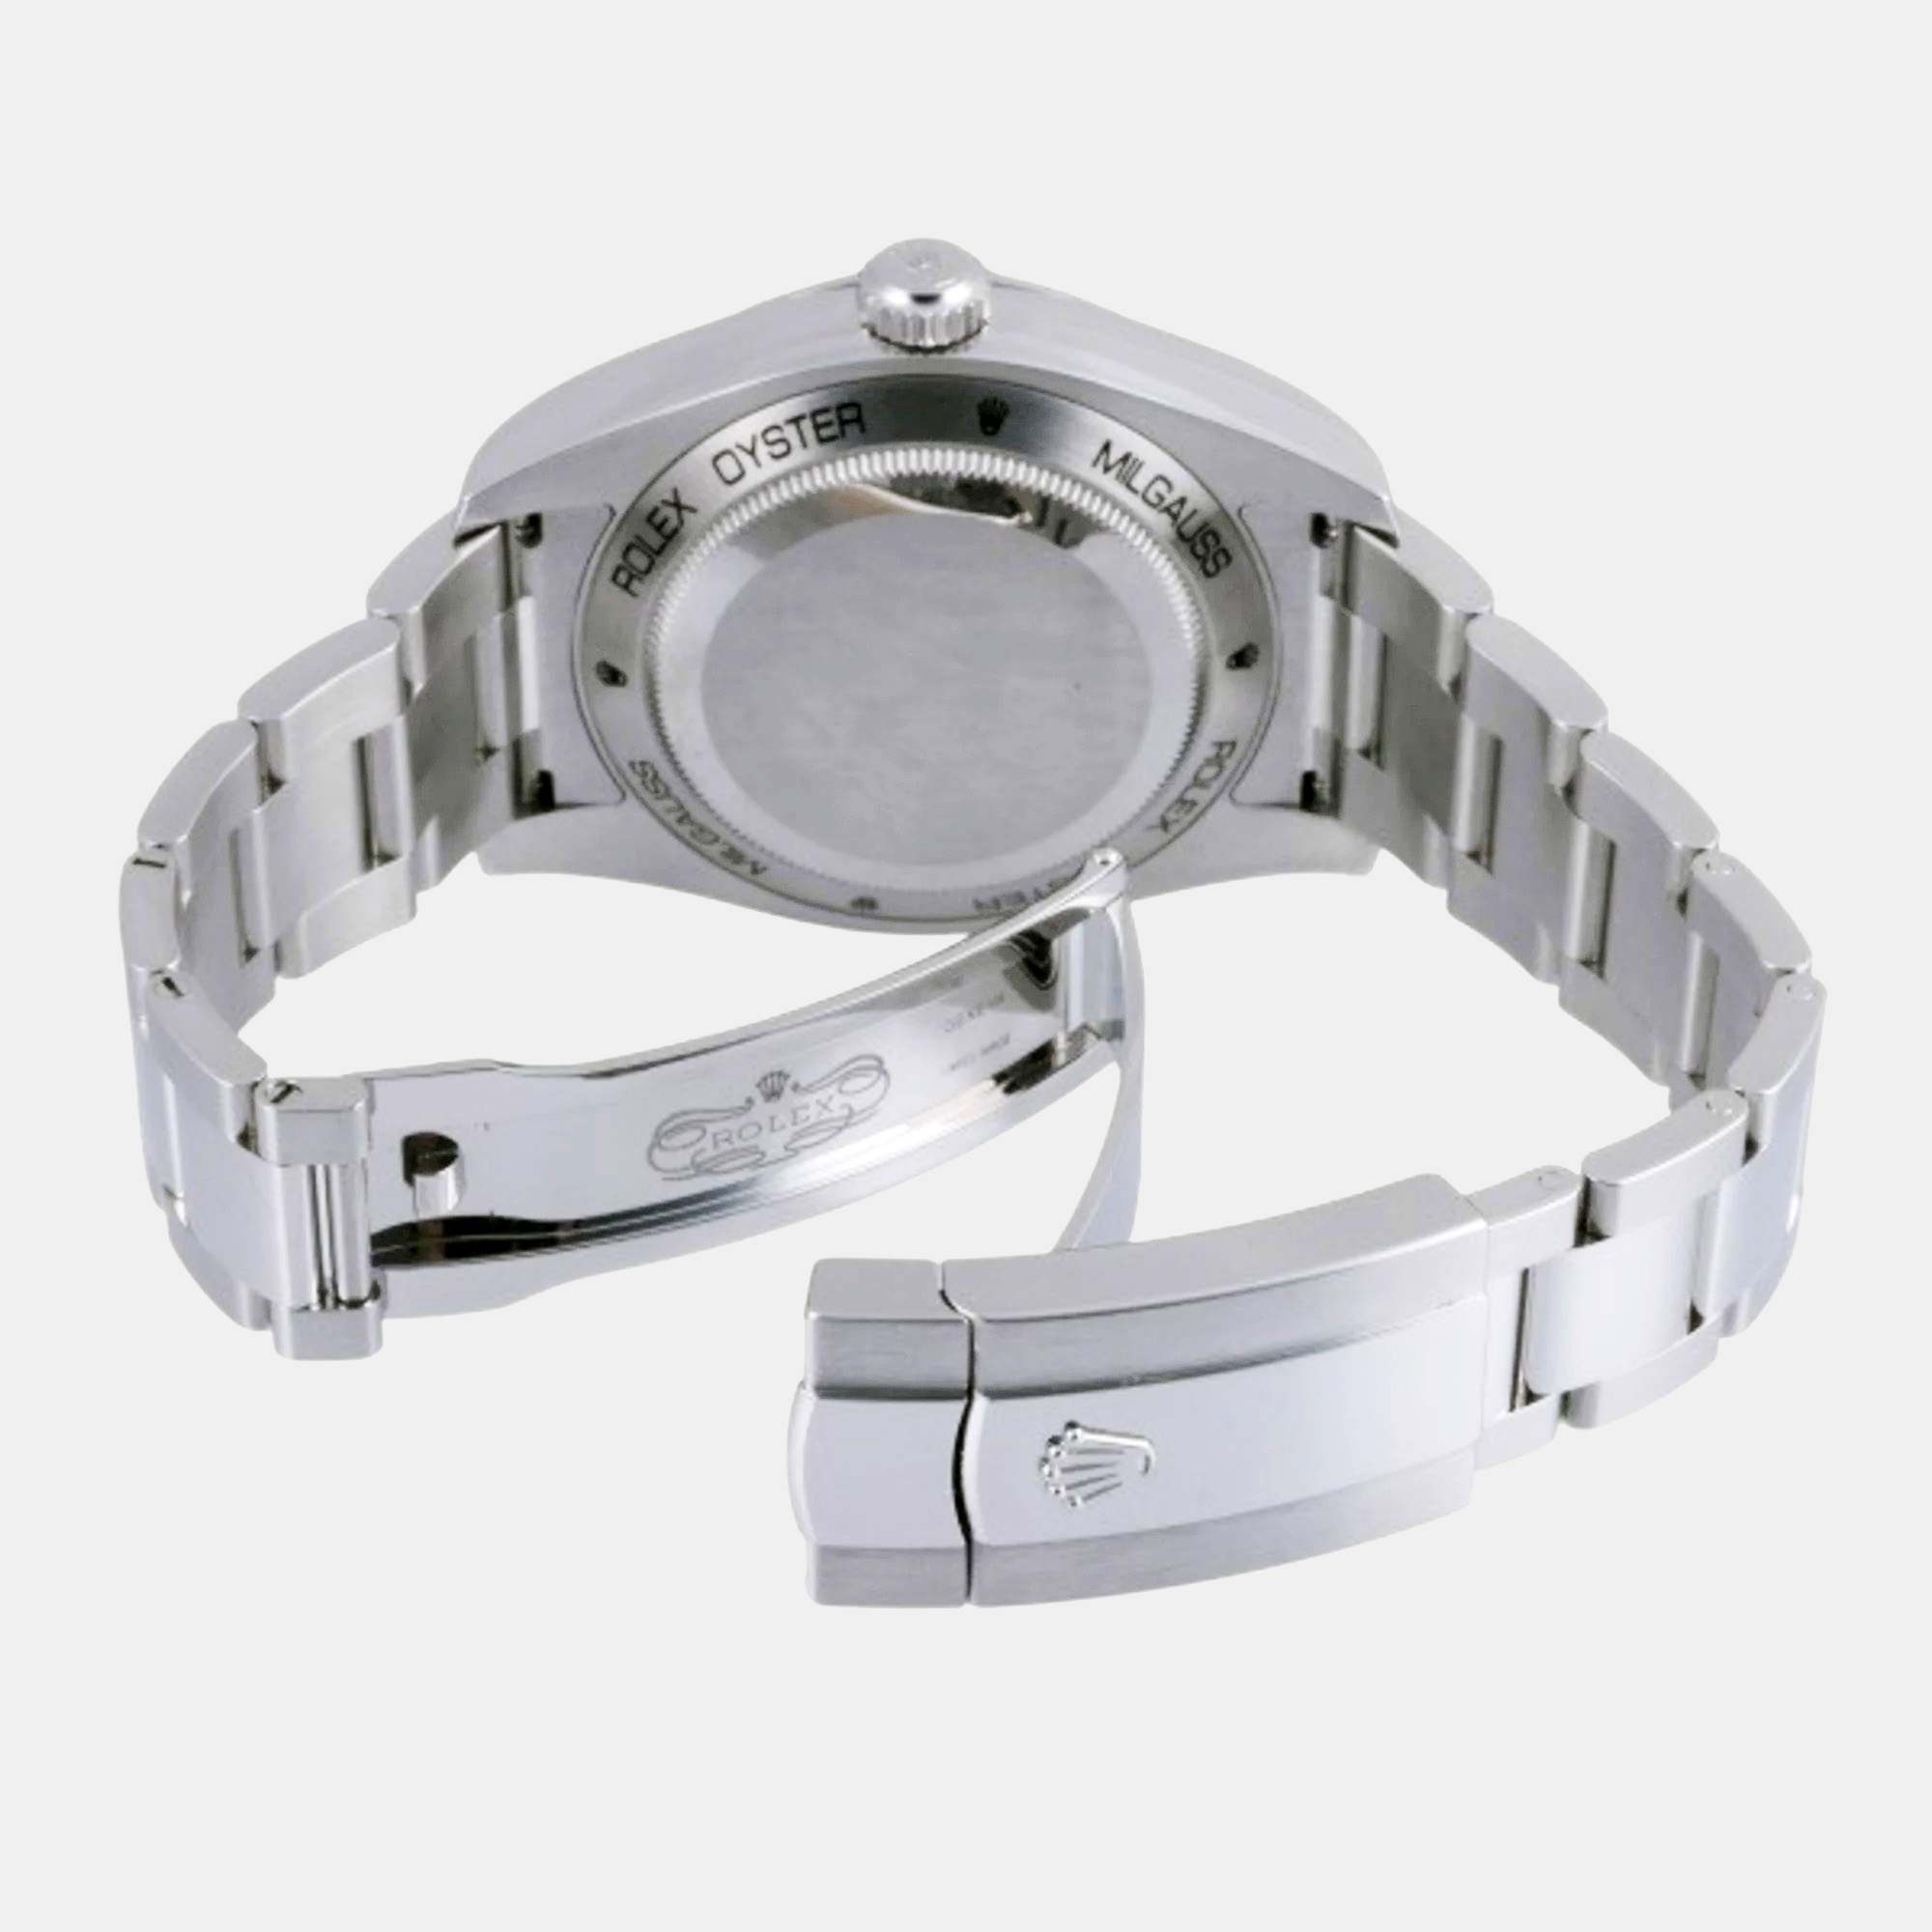 Rolex Blue Stainless Steel Milgauss 116400GV Automatic Men's Wristwatch 40 Mm